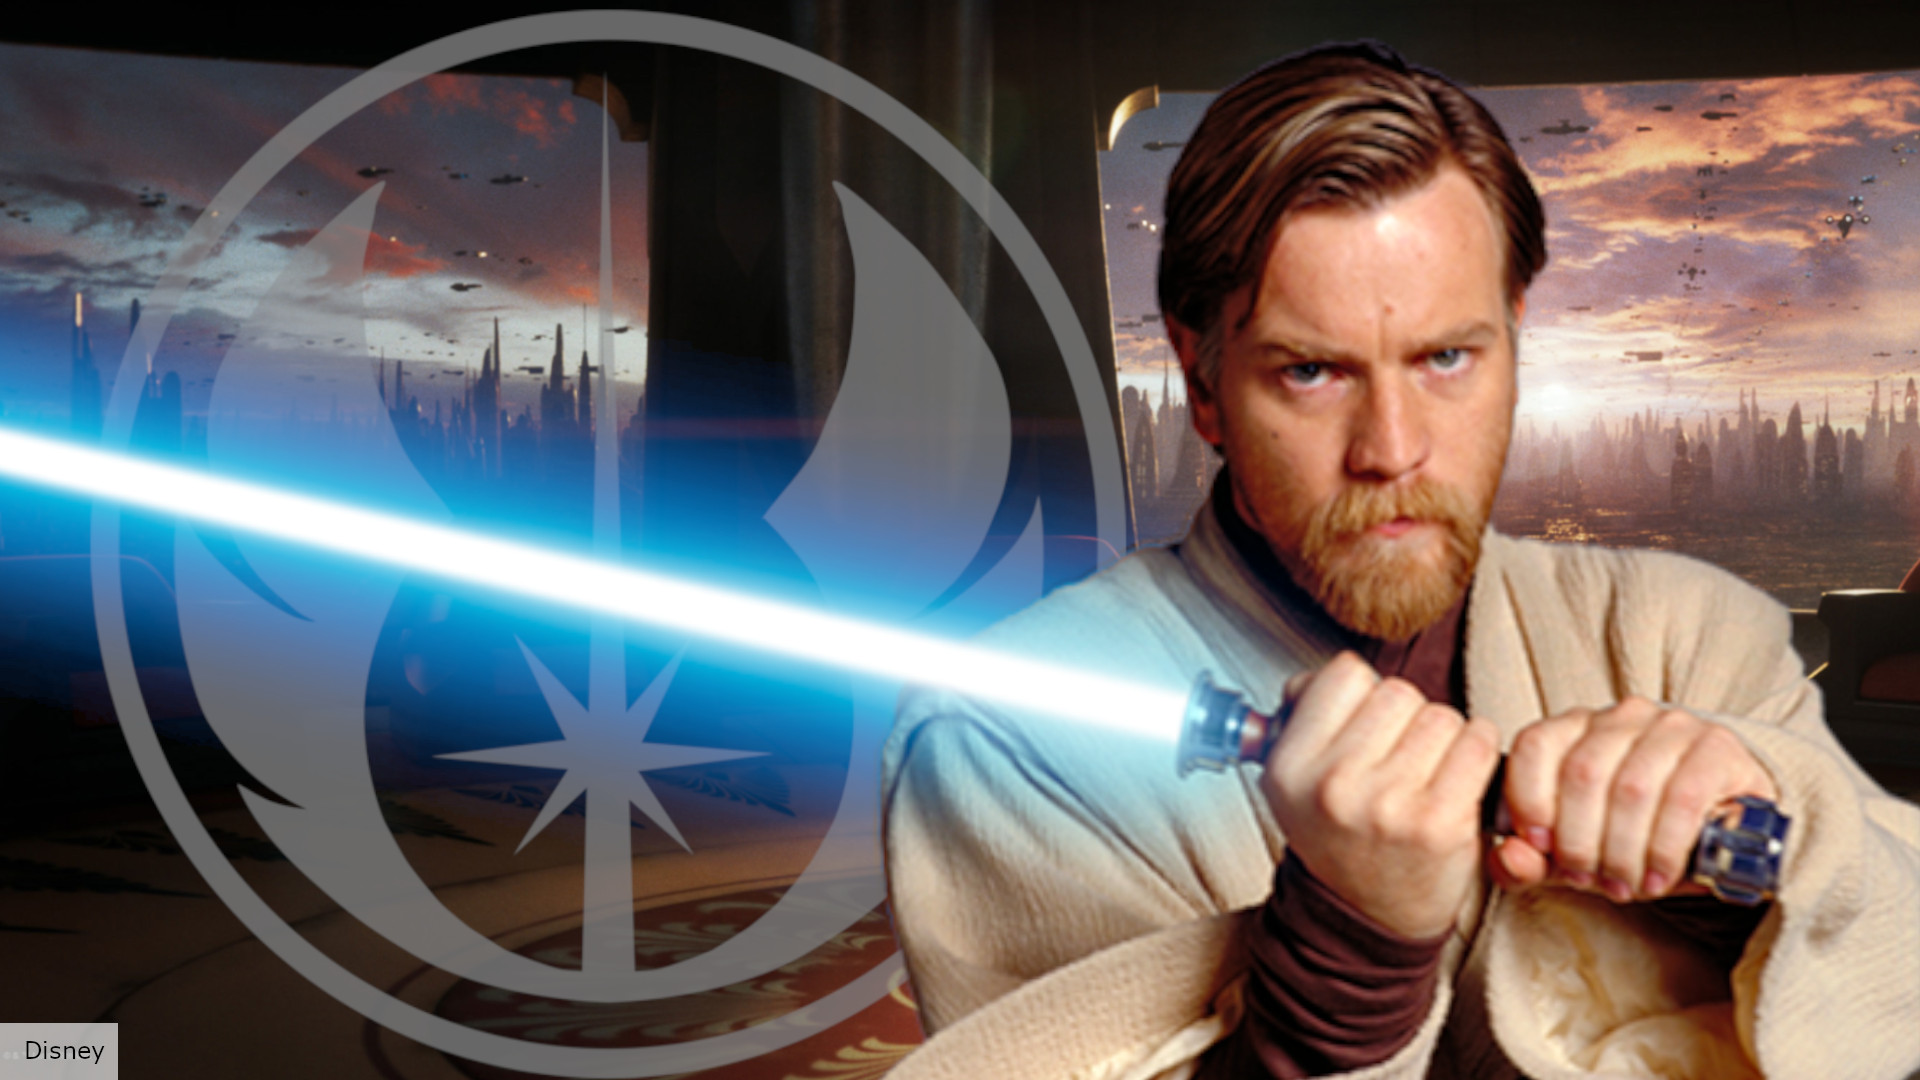 The Gray Jedi Fan Theory In Star Wars Explained